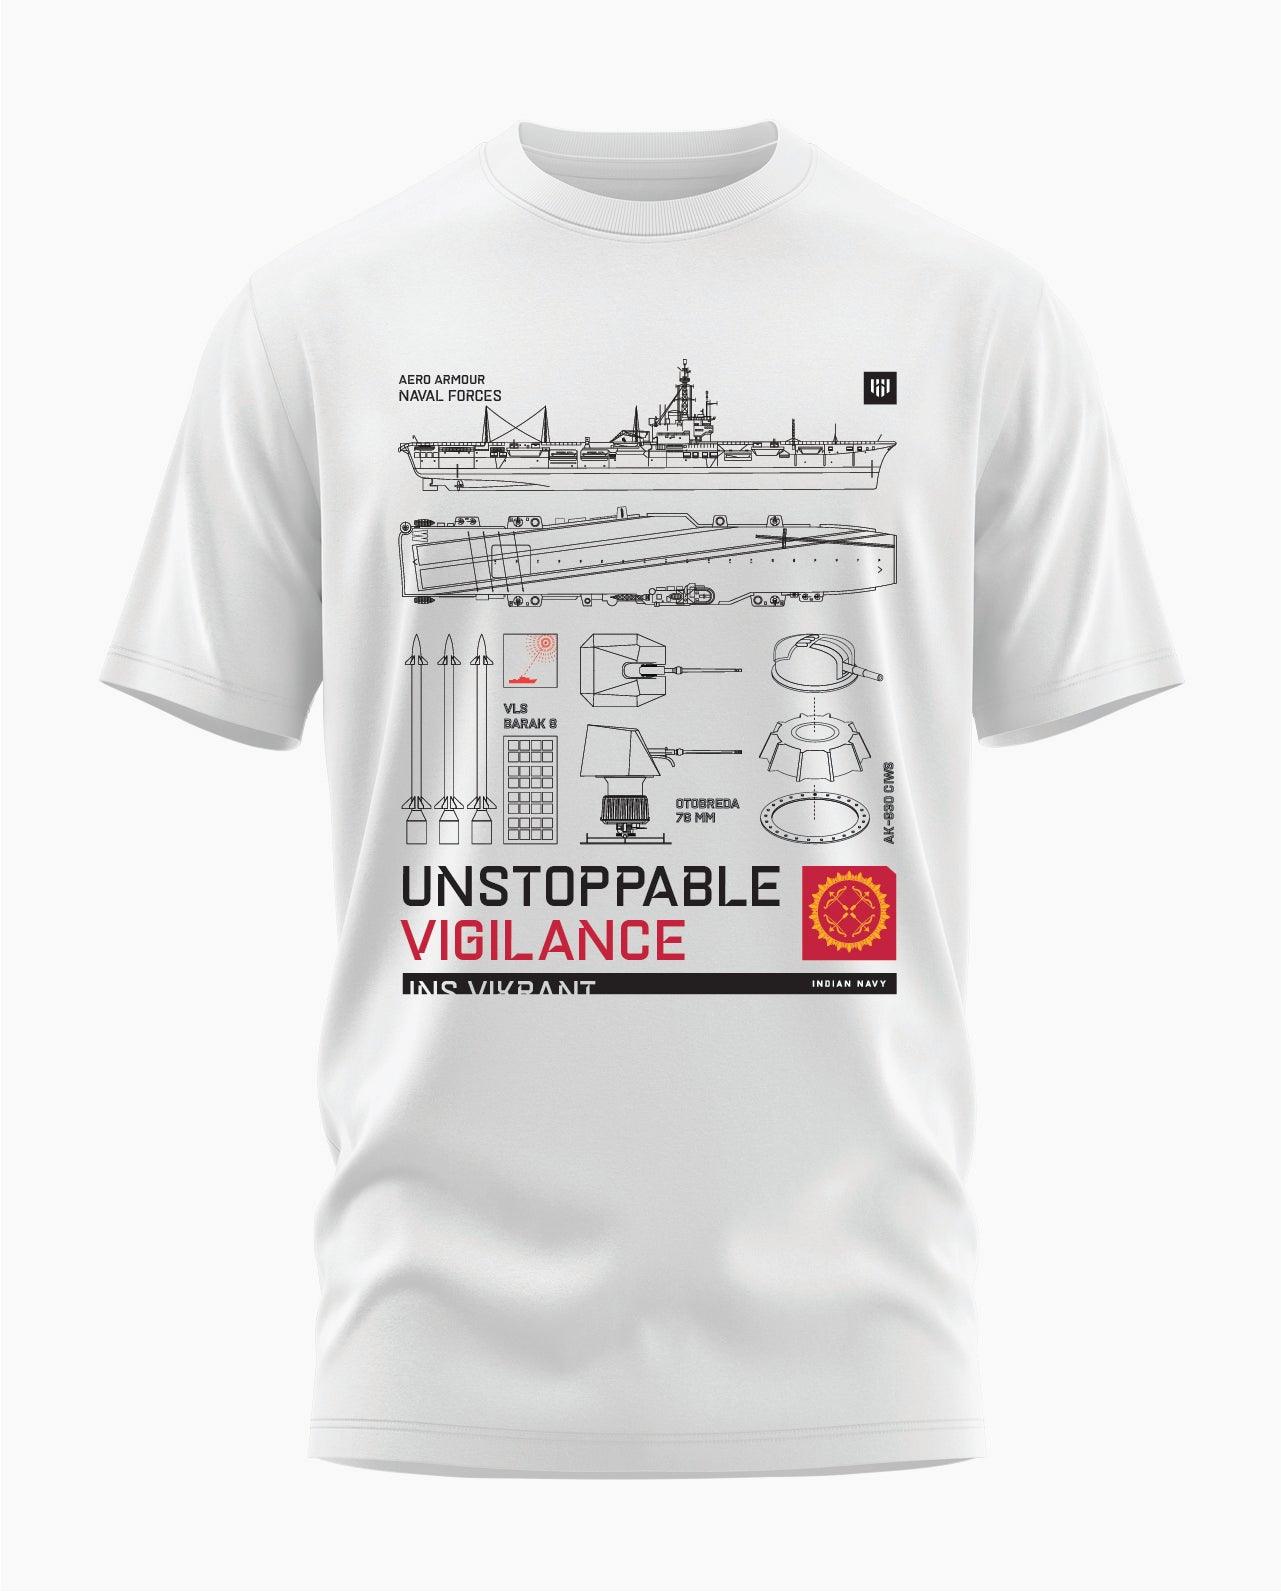 Unstoppable Vigilance T-Shirt - Aero Armour